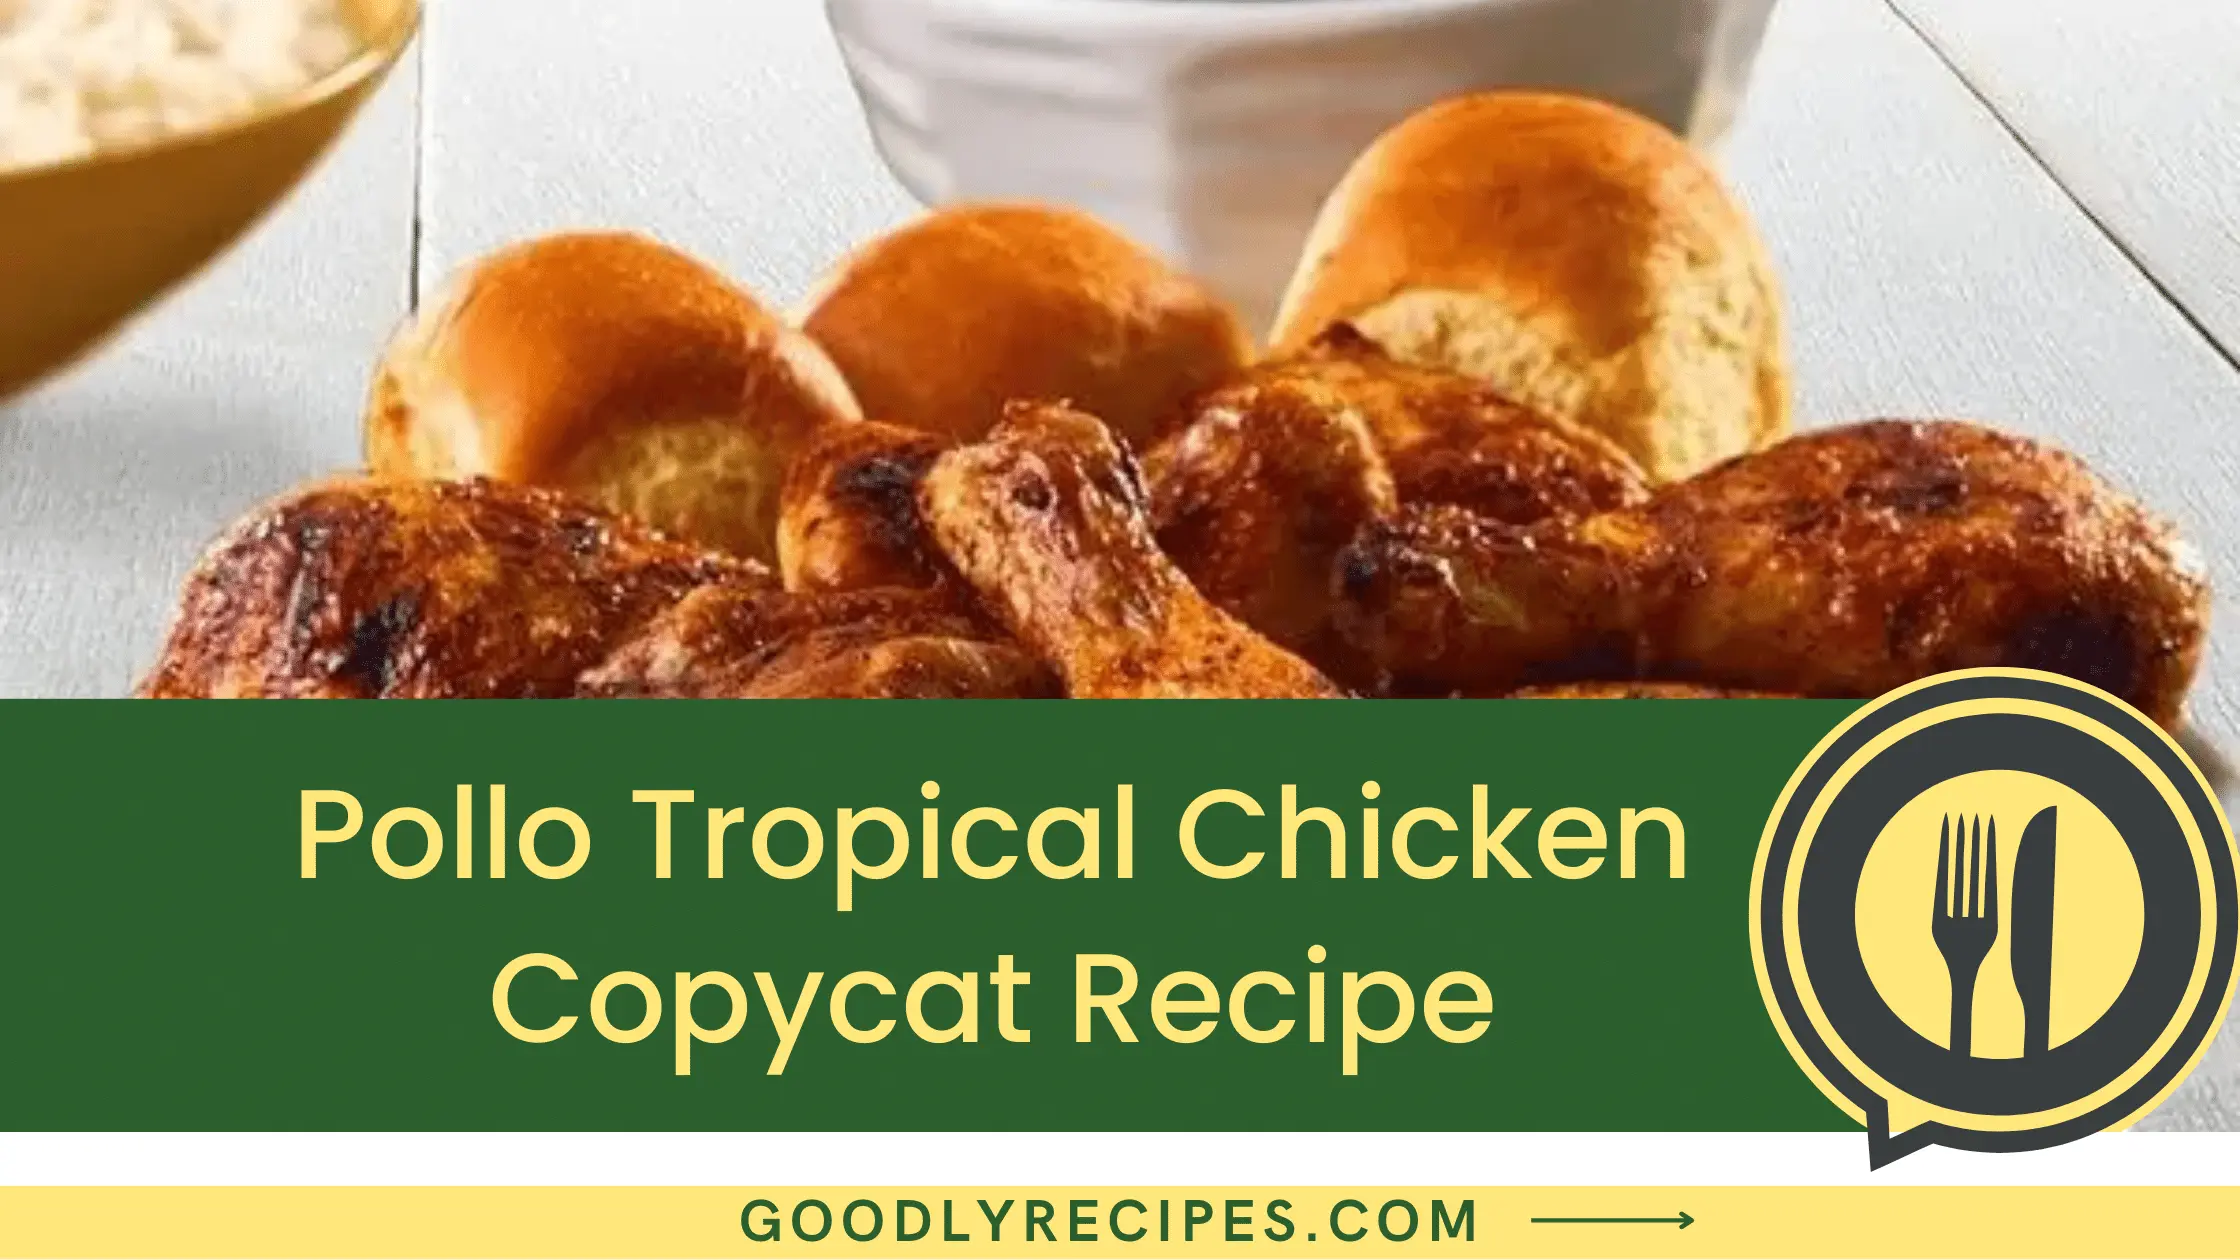 Pollo Tropical Chicken Copycat Recipe - For Food Lovers